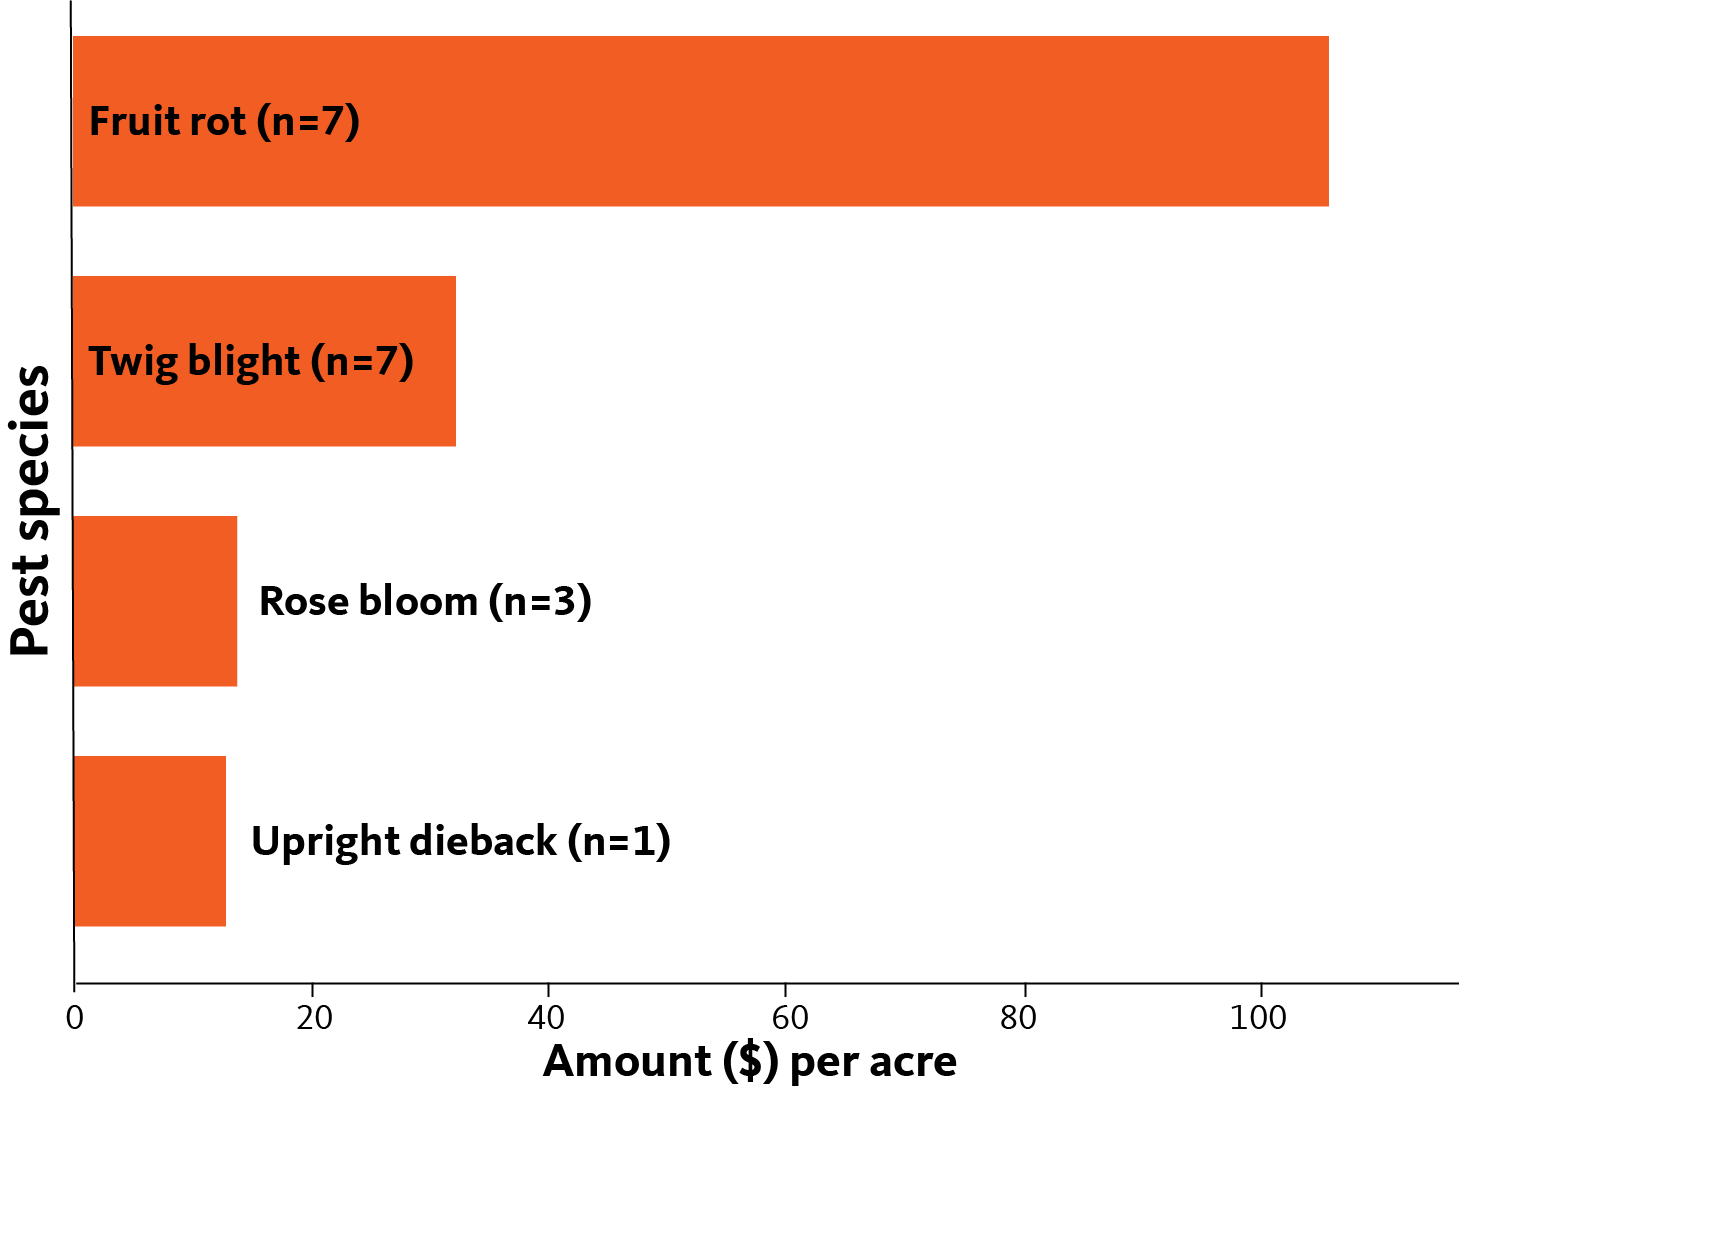 bar chart showing fruit rot leading expense